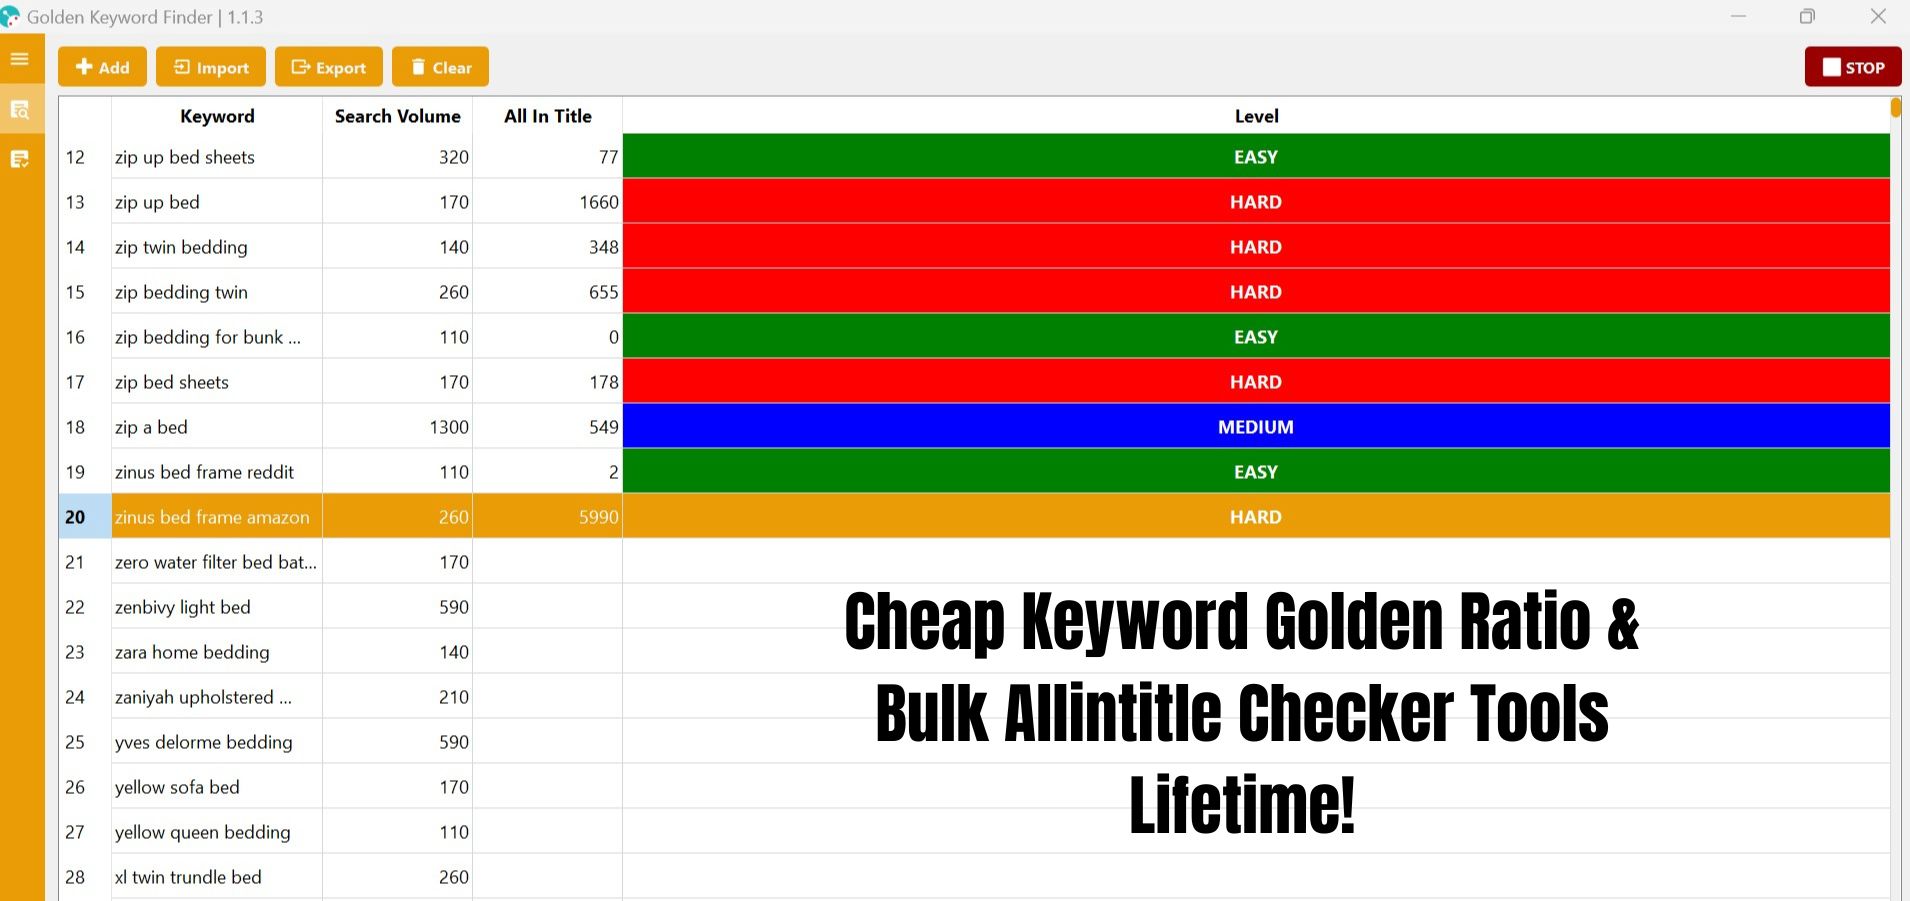 Cheap Keyword Golden Ratio & Bulk Allintitle Checker Tools Lifetime!